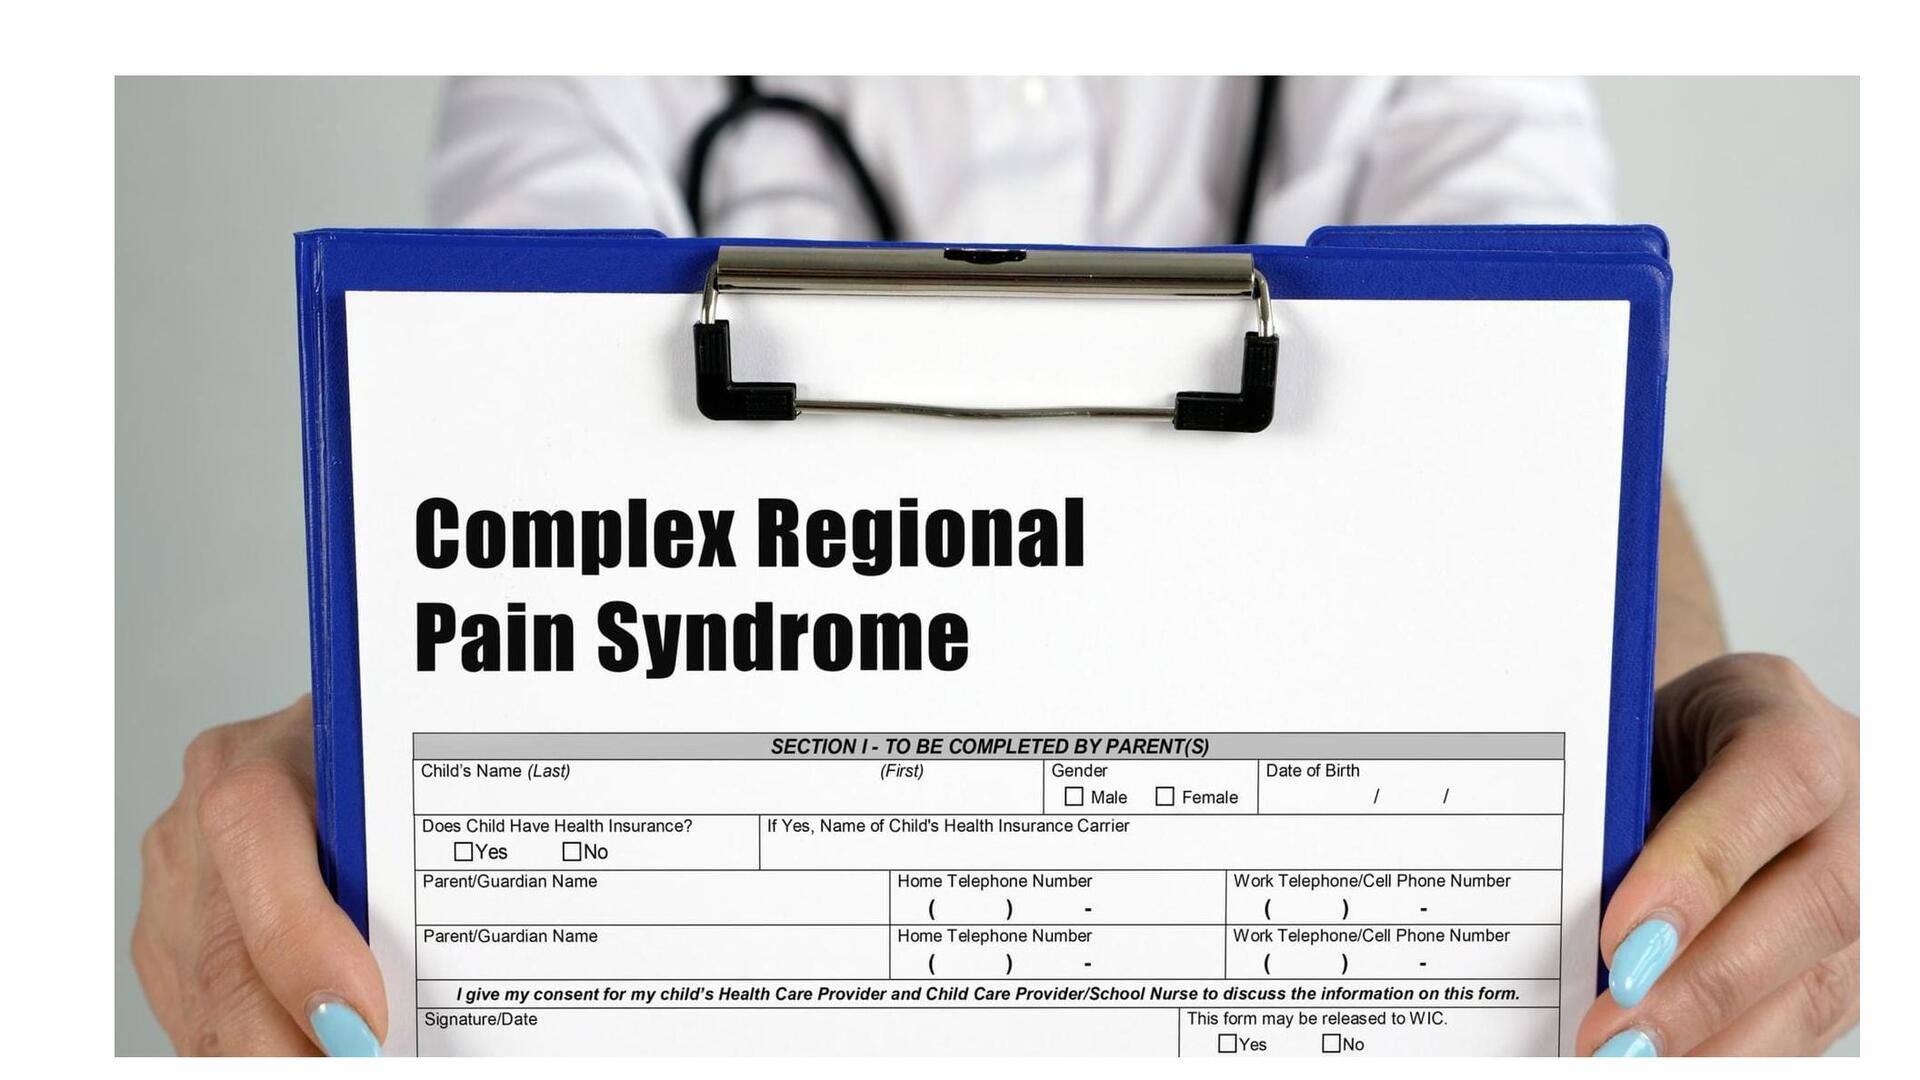 Sindrom nyeri regional kompleks: Gejala, penyebab, dan pengobatan